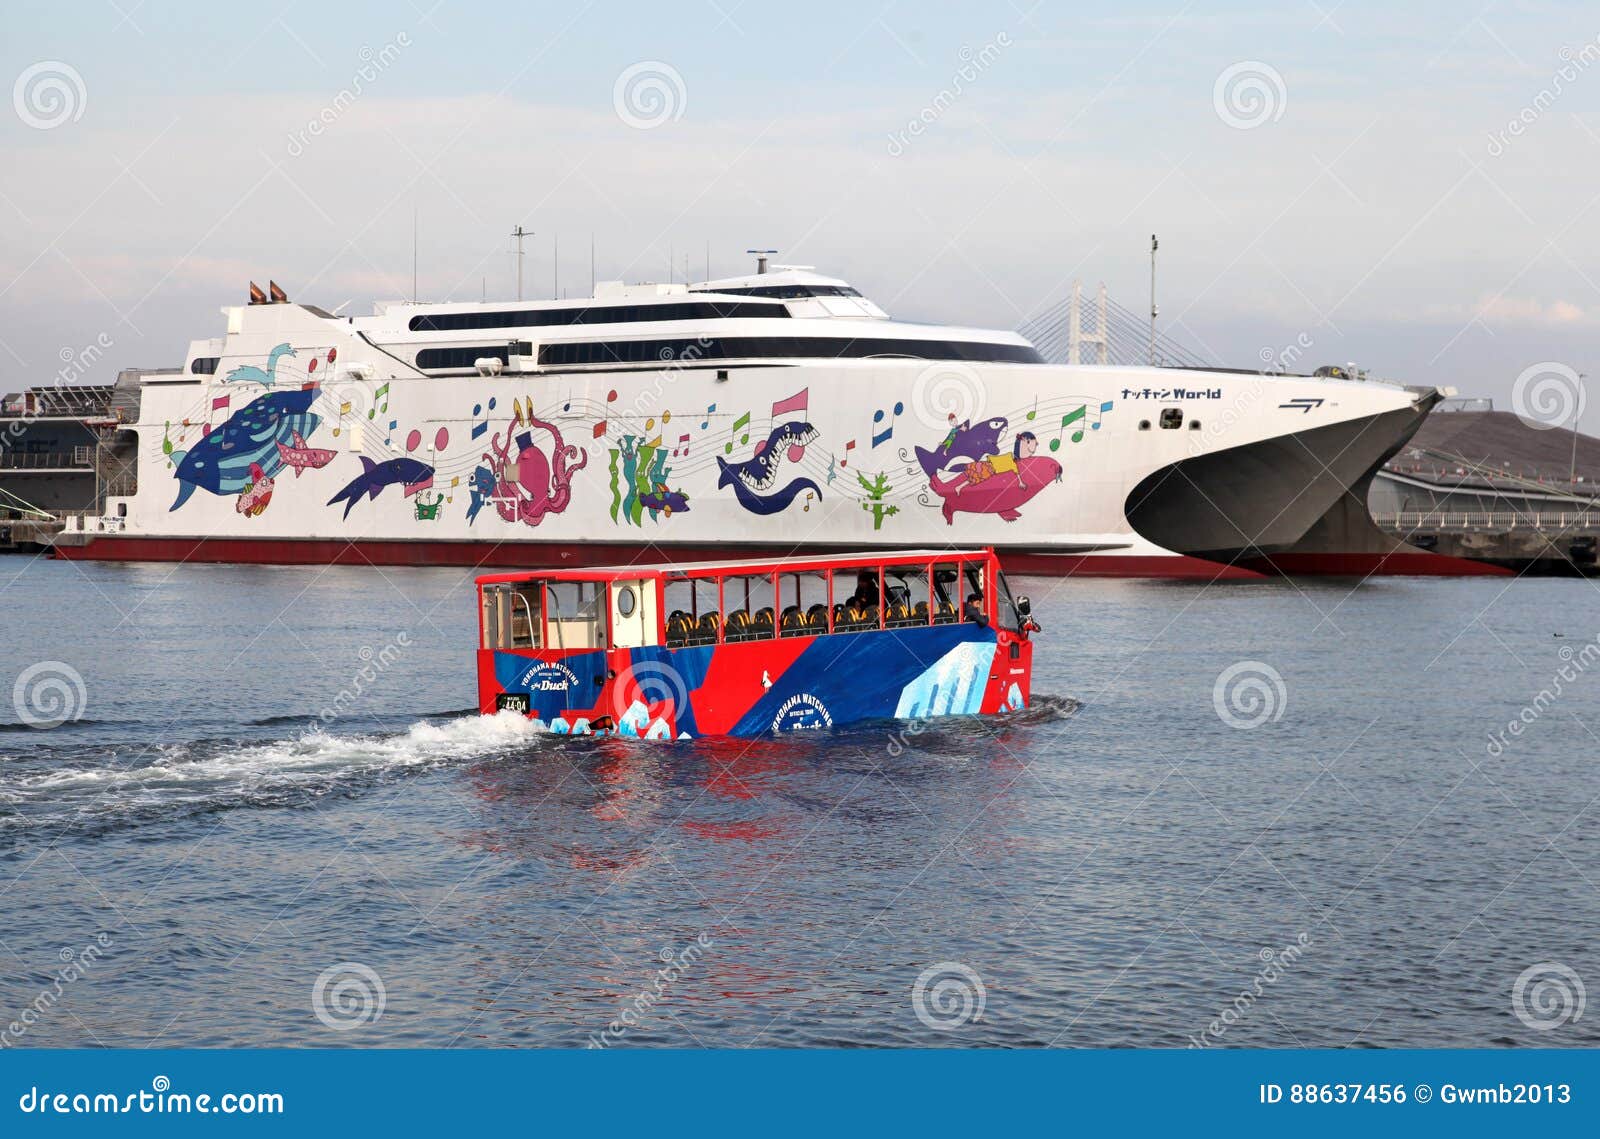 amphibious bus tour yokohama editorial photo - image of